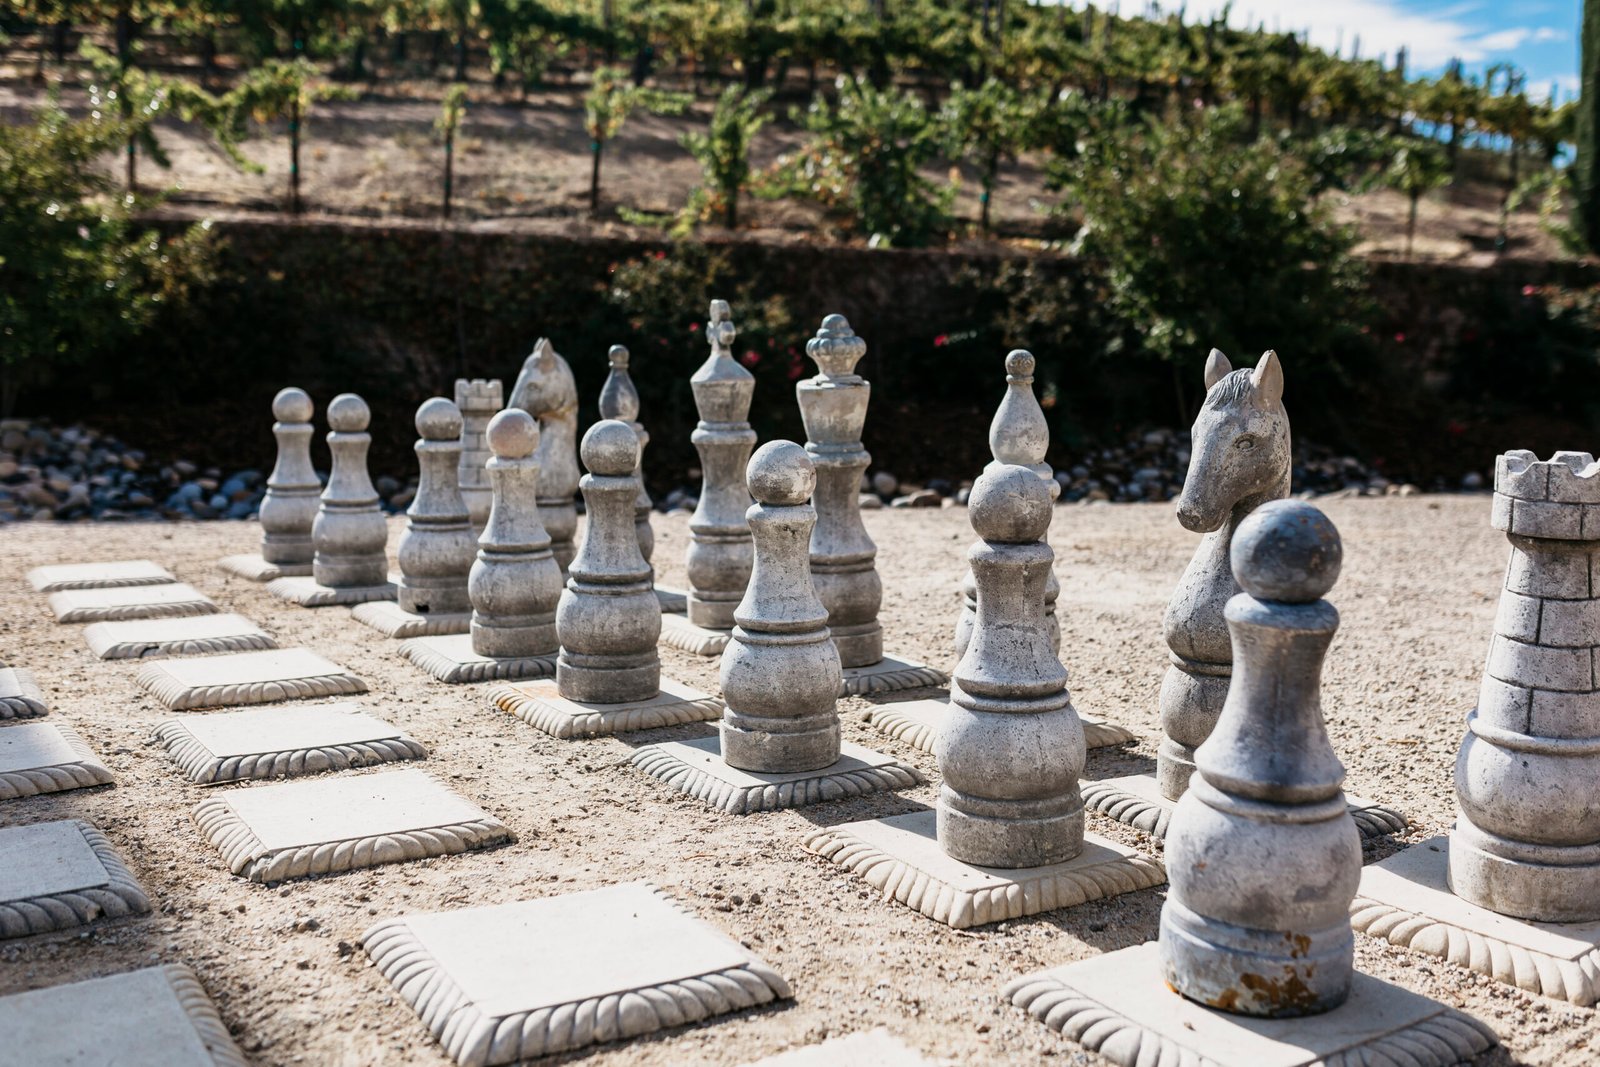 giant lawn chess game at Allegretto Vineyard Resort